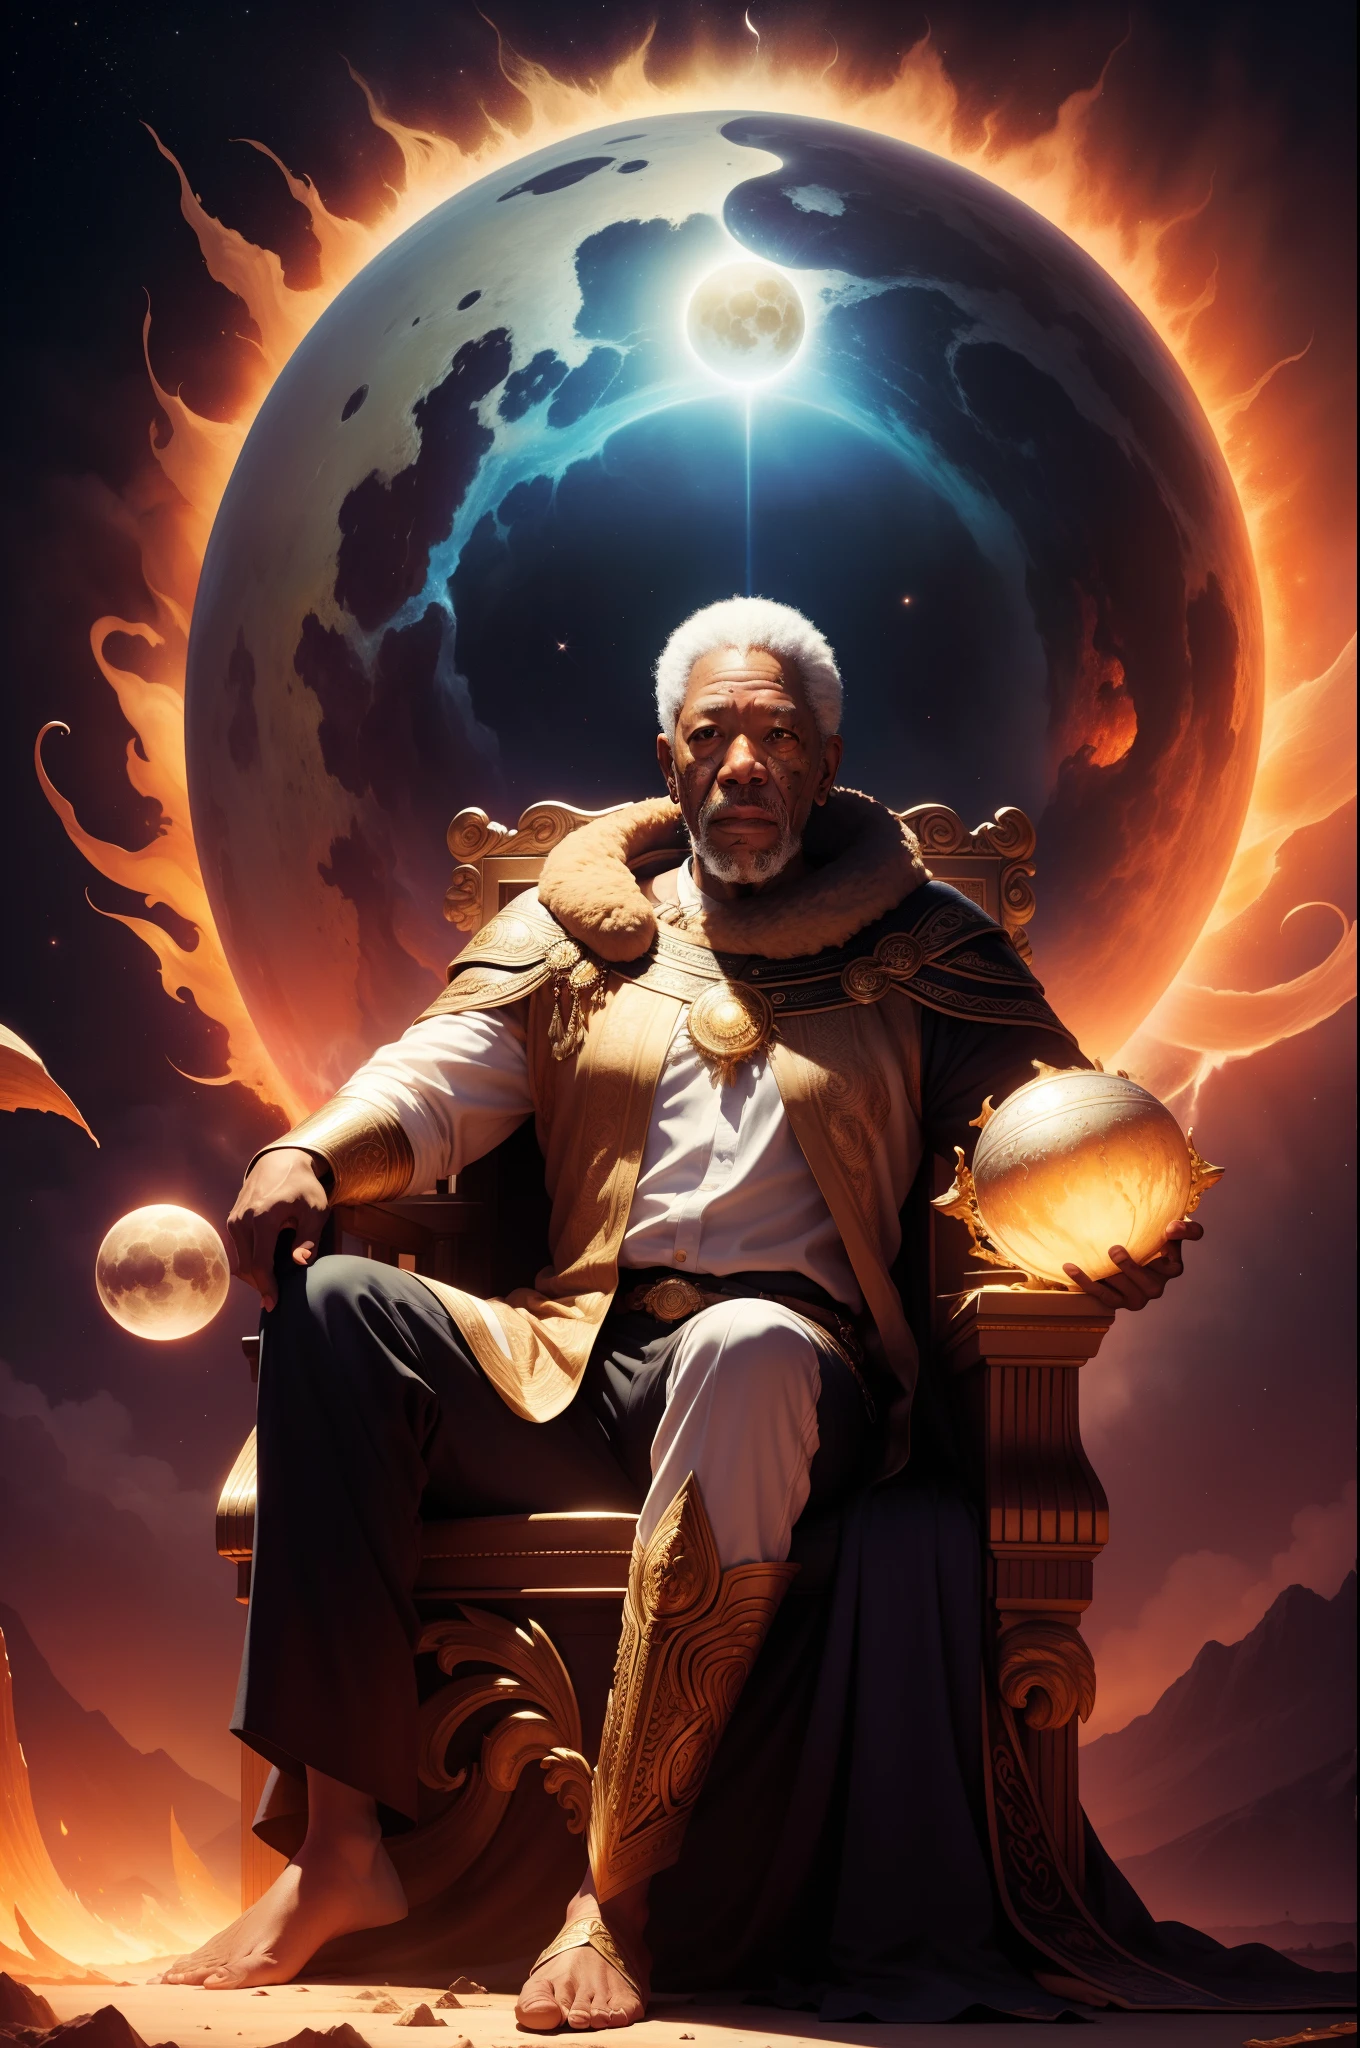 "A portrait of Morgan Freeman in the form of a mythical god. Retrate-o segurando o sol e a lua, envolto por uma aura radiante. Place them on a magnificent throne amid a cosmic backdrop."